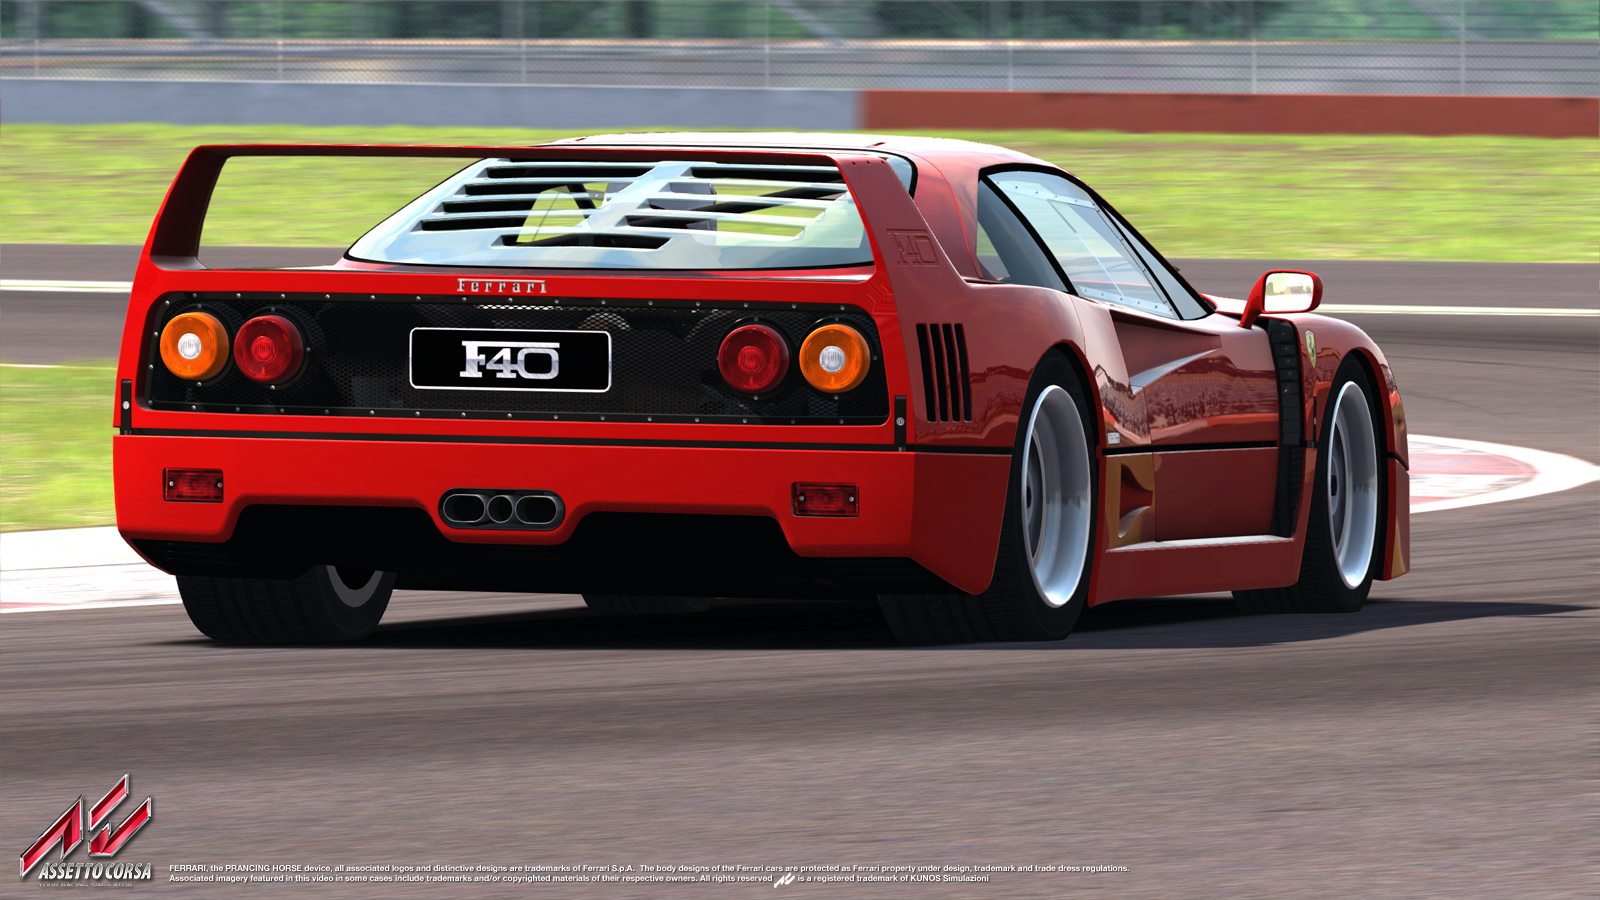 [Bild: Assetto_Corsa_Ferrari_F40_Preview.jpg]